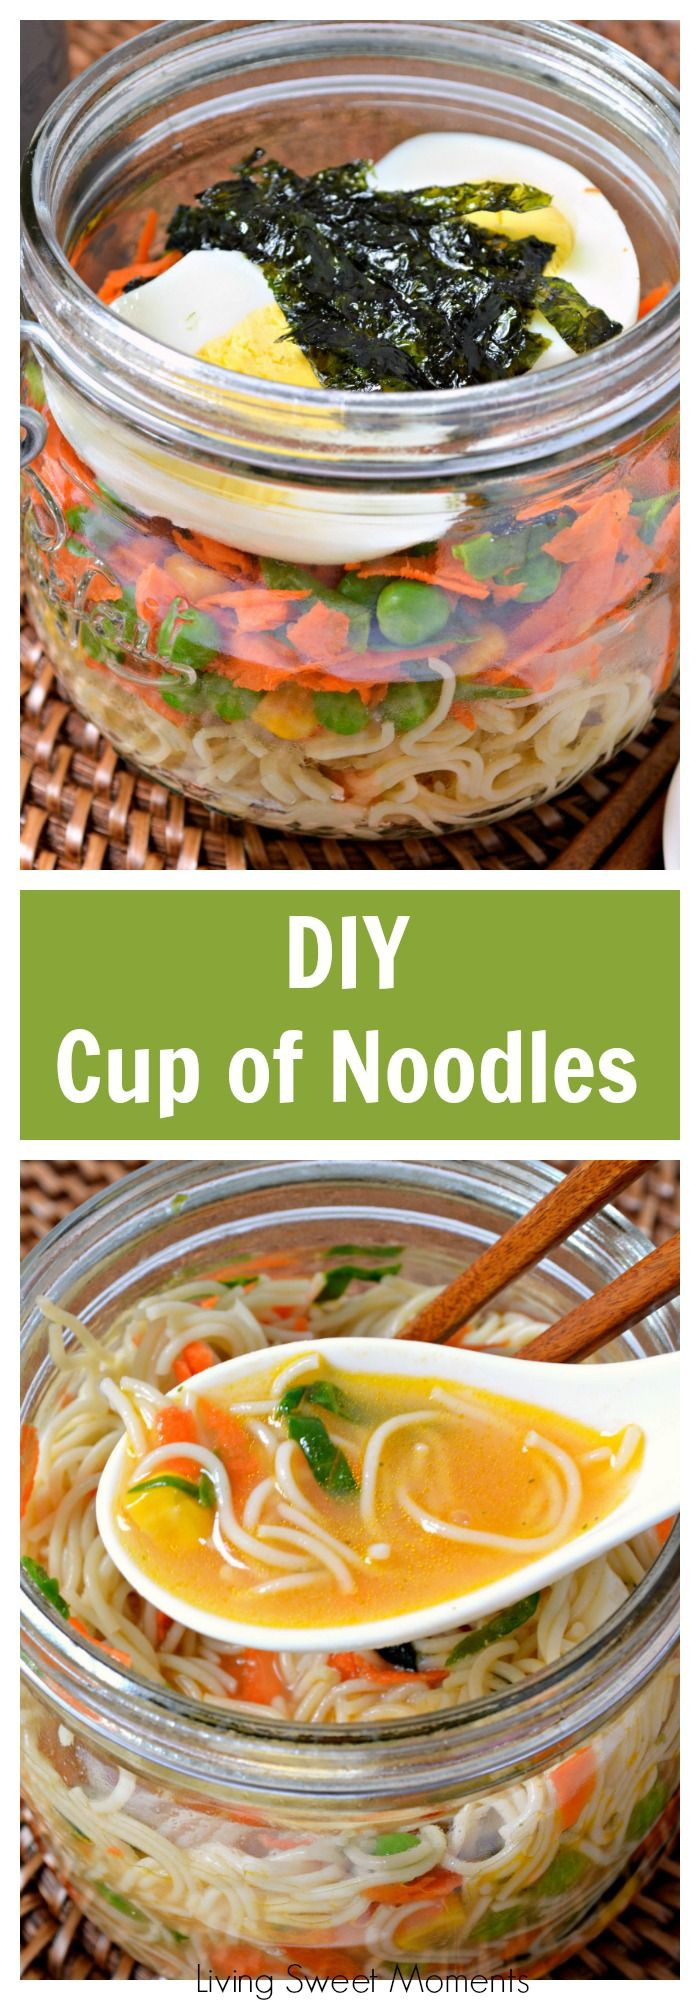 Cup Of Noodles Recipes
 DIY Cup Noodles Recipe